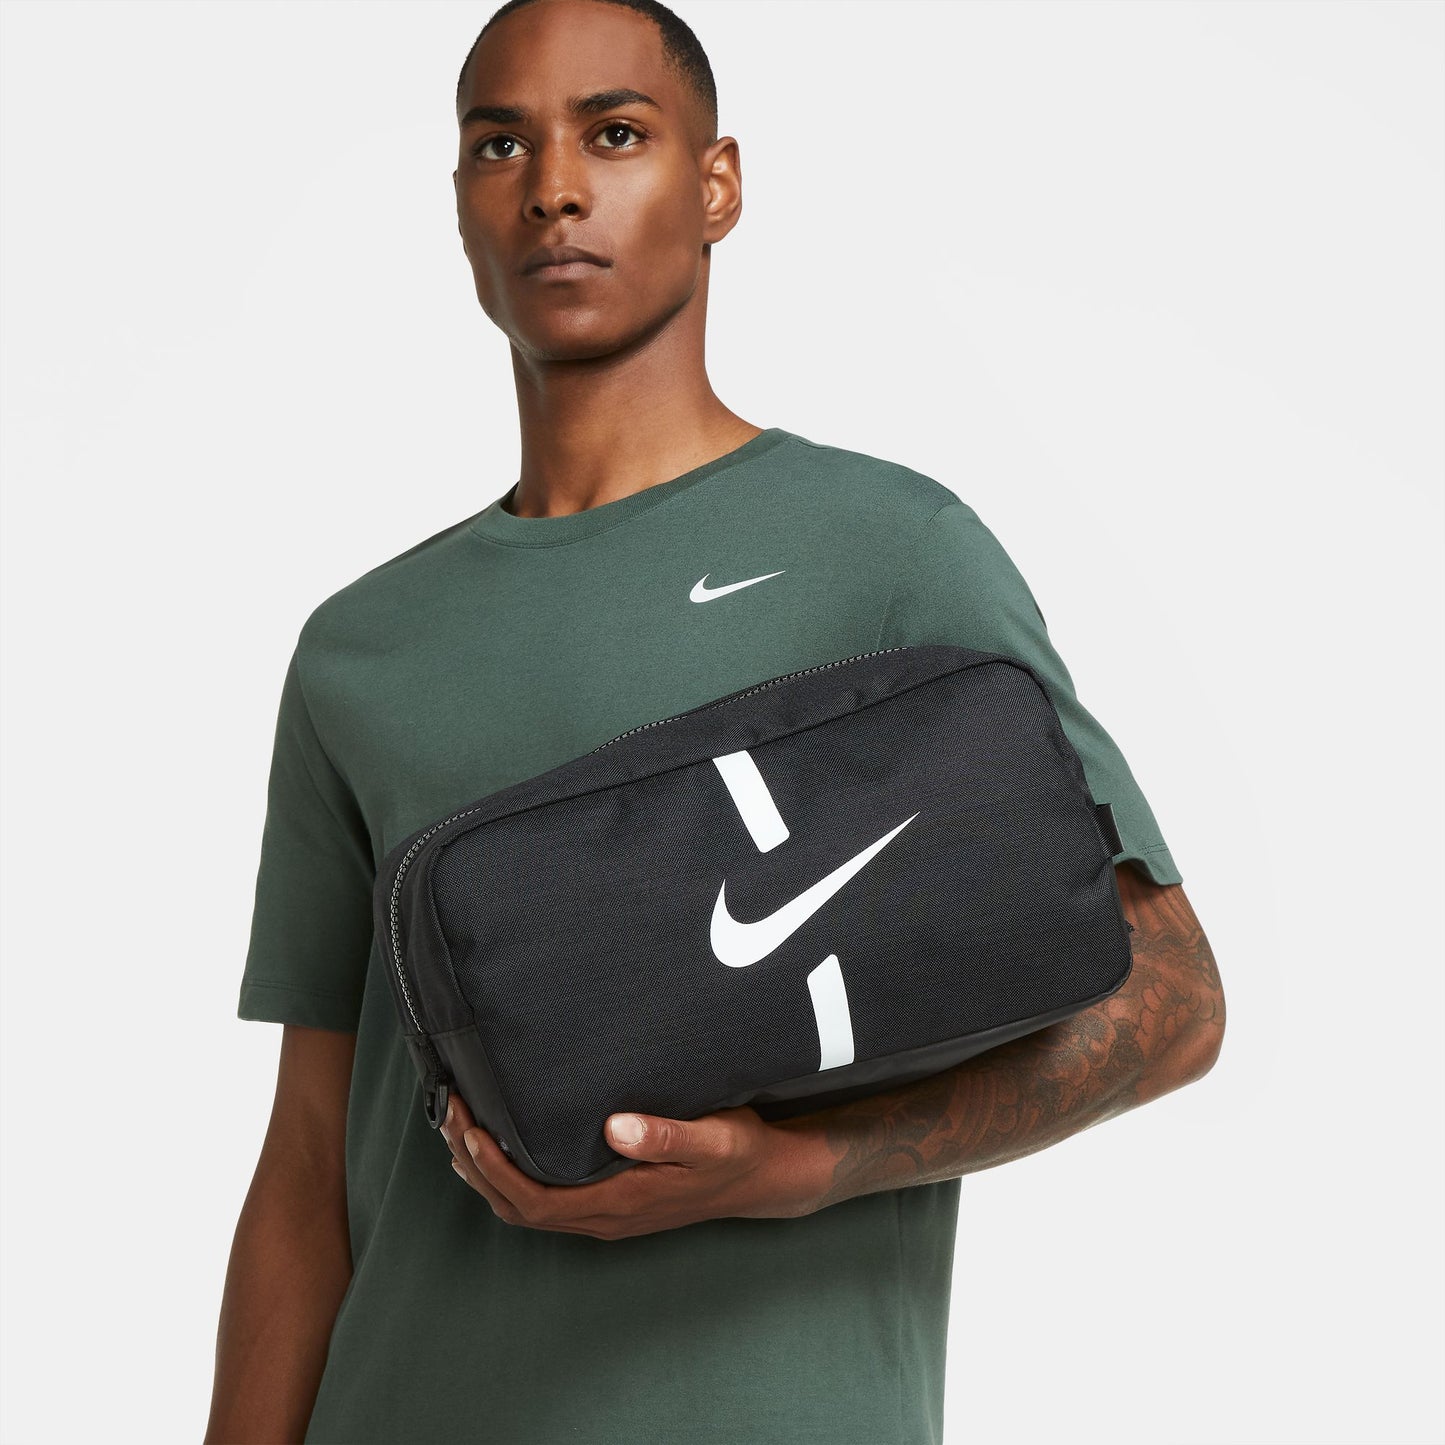 Nike Academy - Soccer Shoe Bag - Black